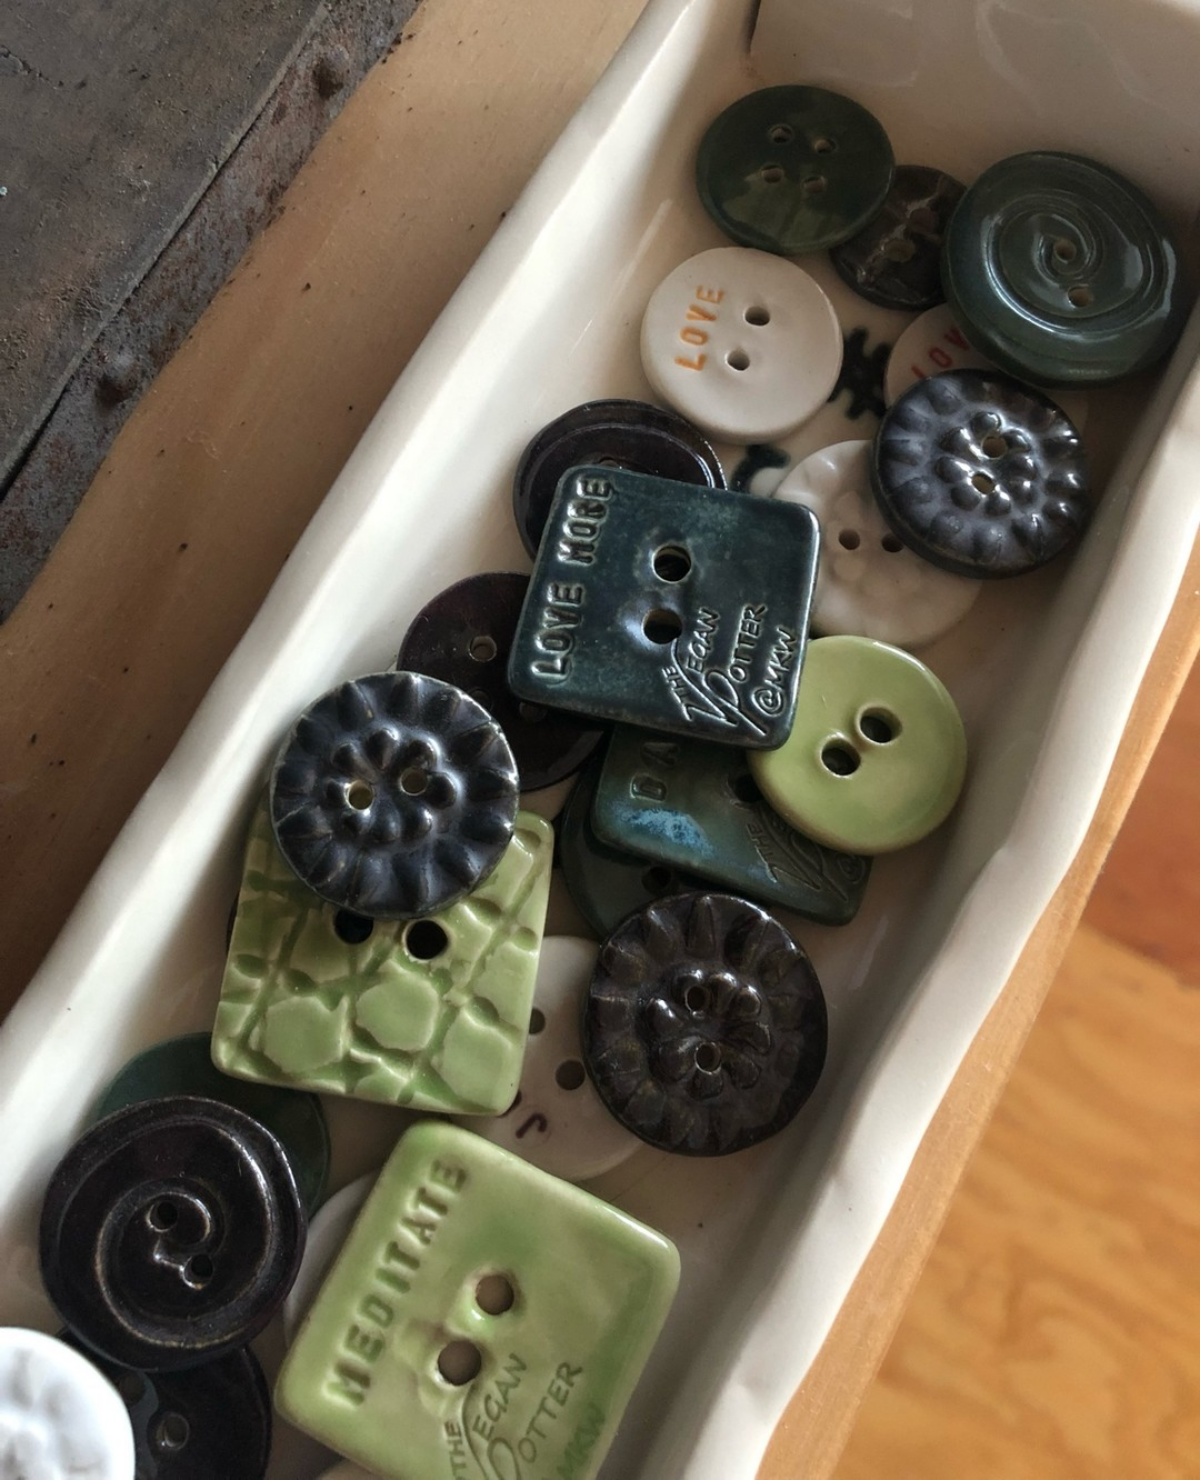 handmade clay buttons